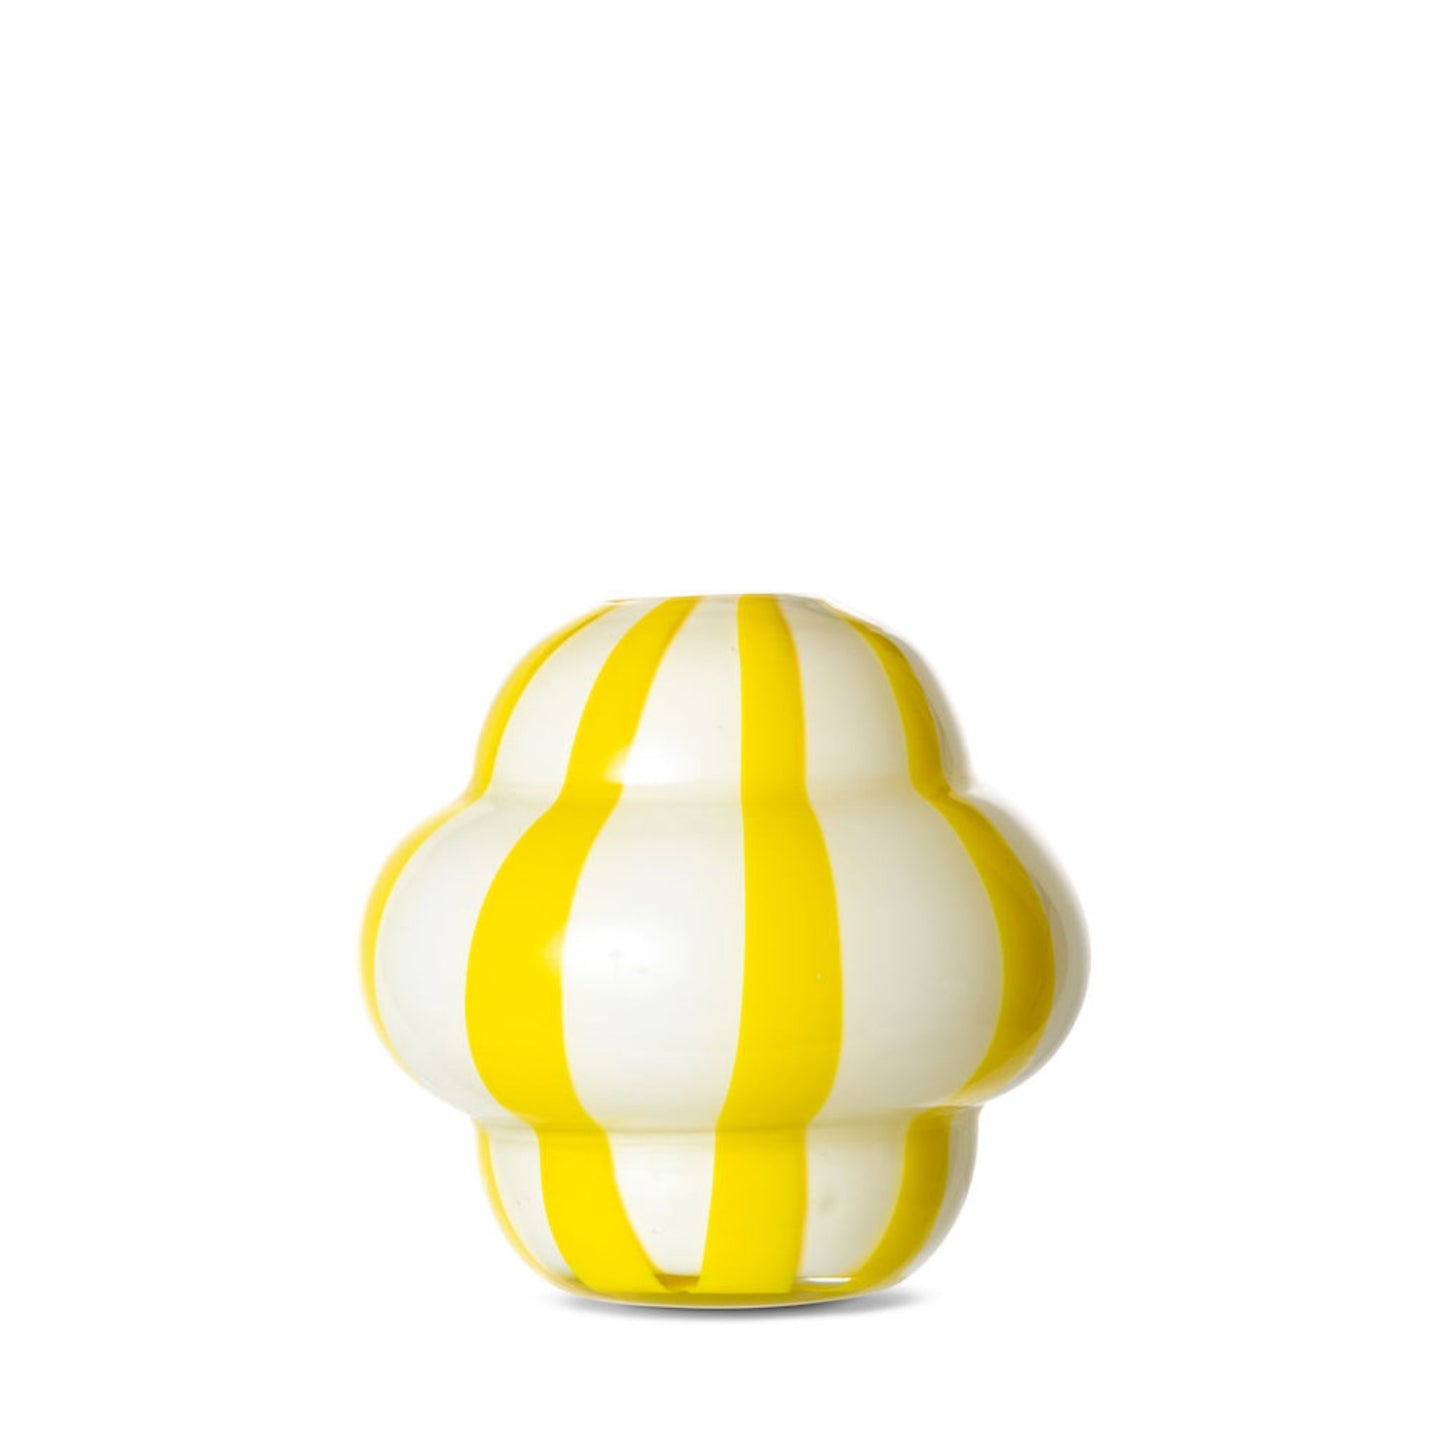 Byon by Widgeteer Curlie Striped Vase, Yellow